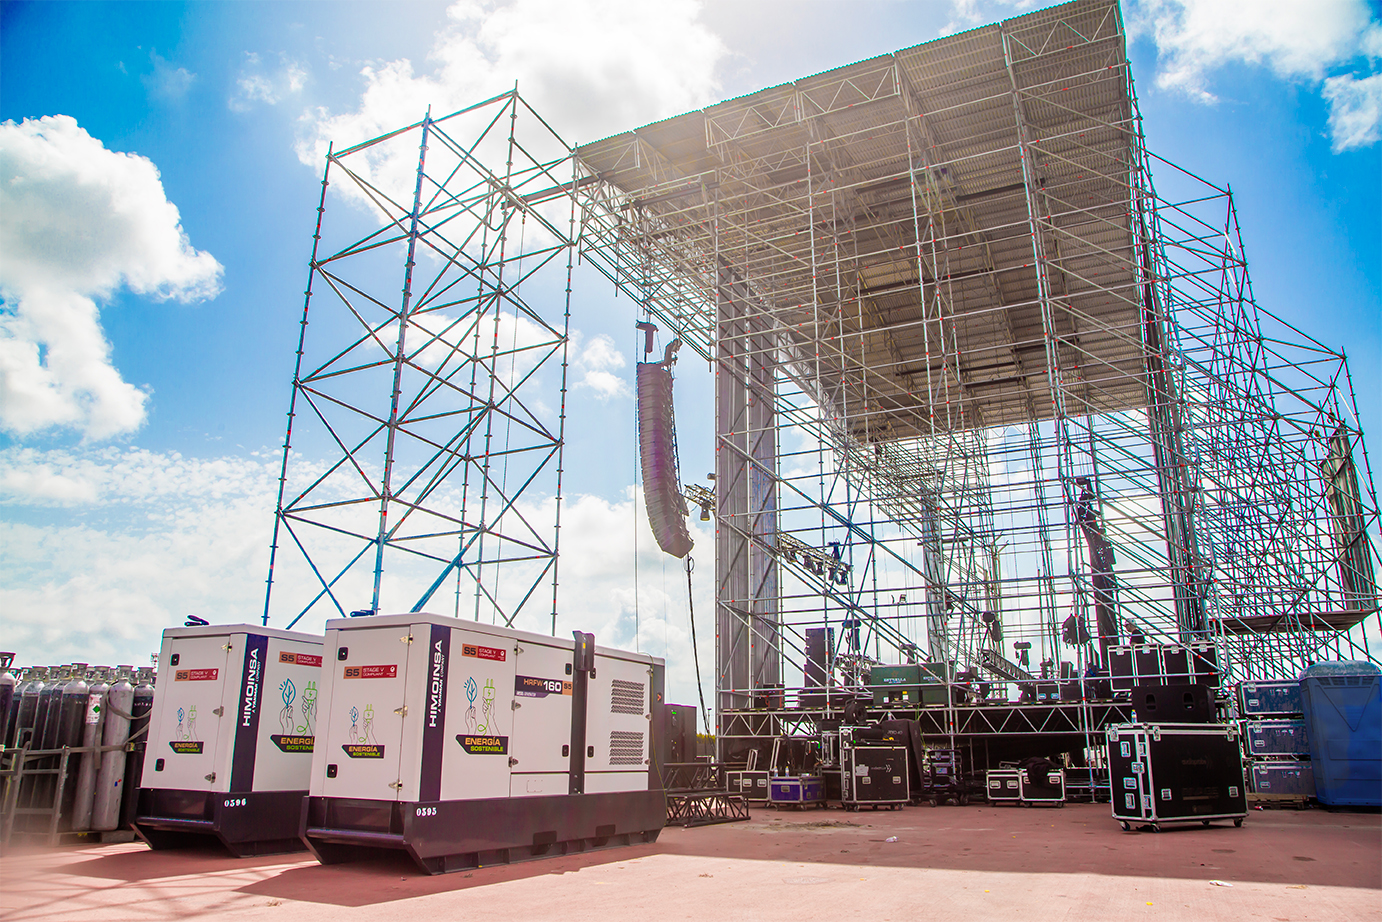 HIMOINSA ha suministrado energía en el Festival sostenible 'Fan Futura Fest'